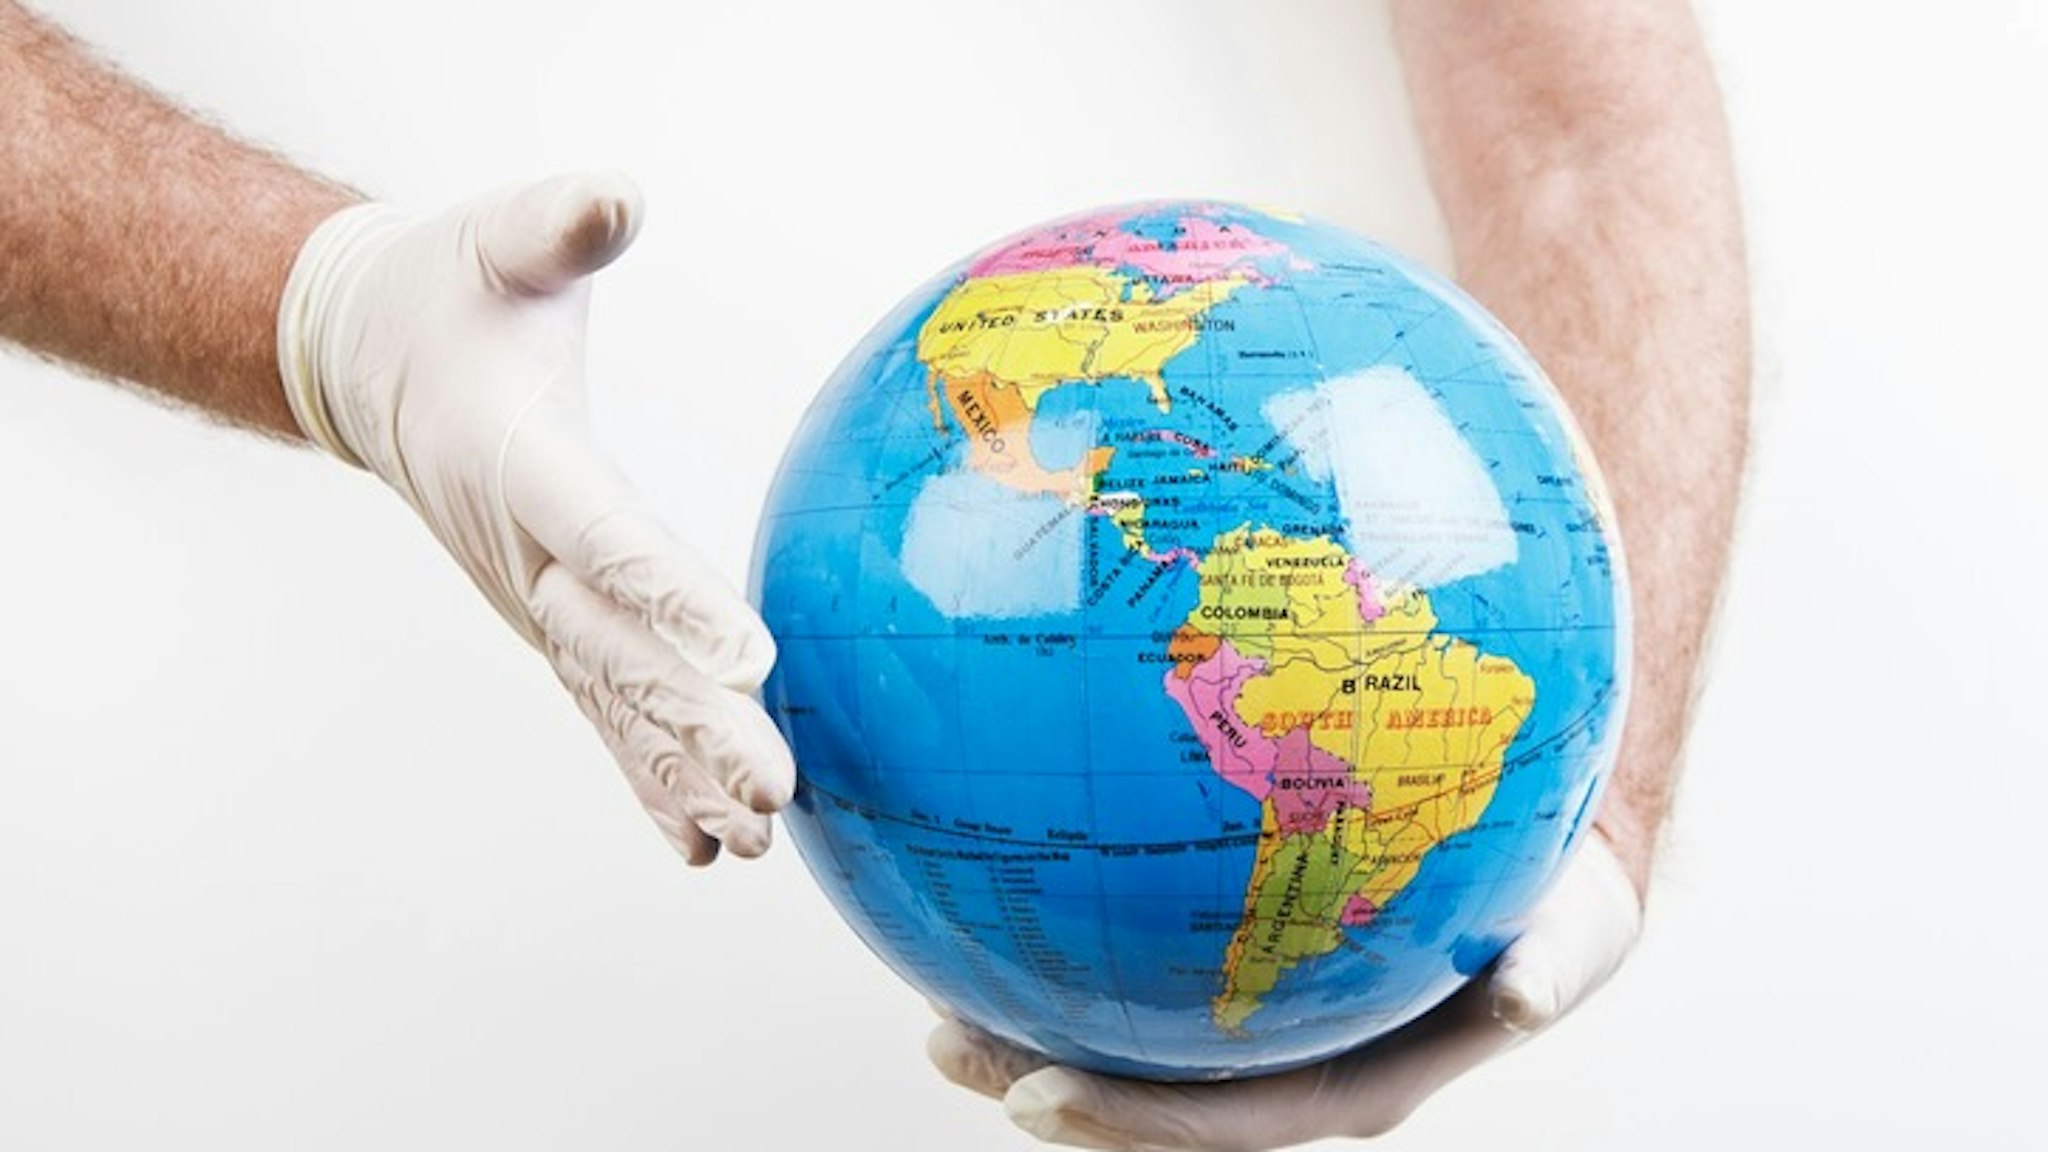 Global health | Doctor wearing gloves holds globe - stock photo